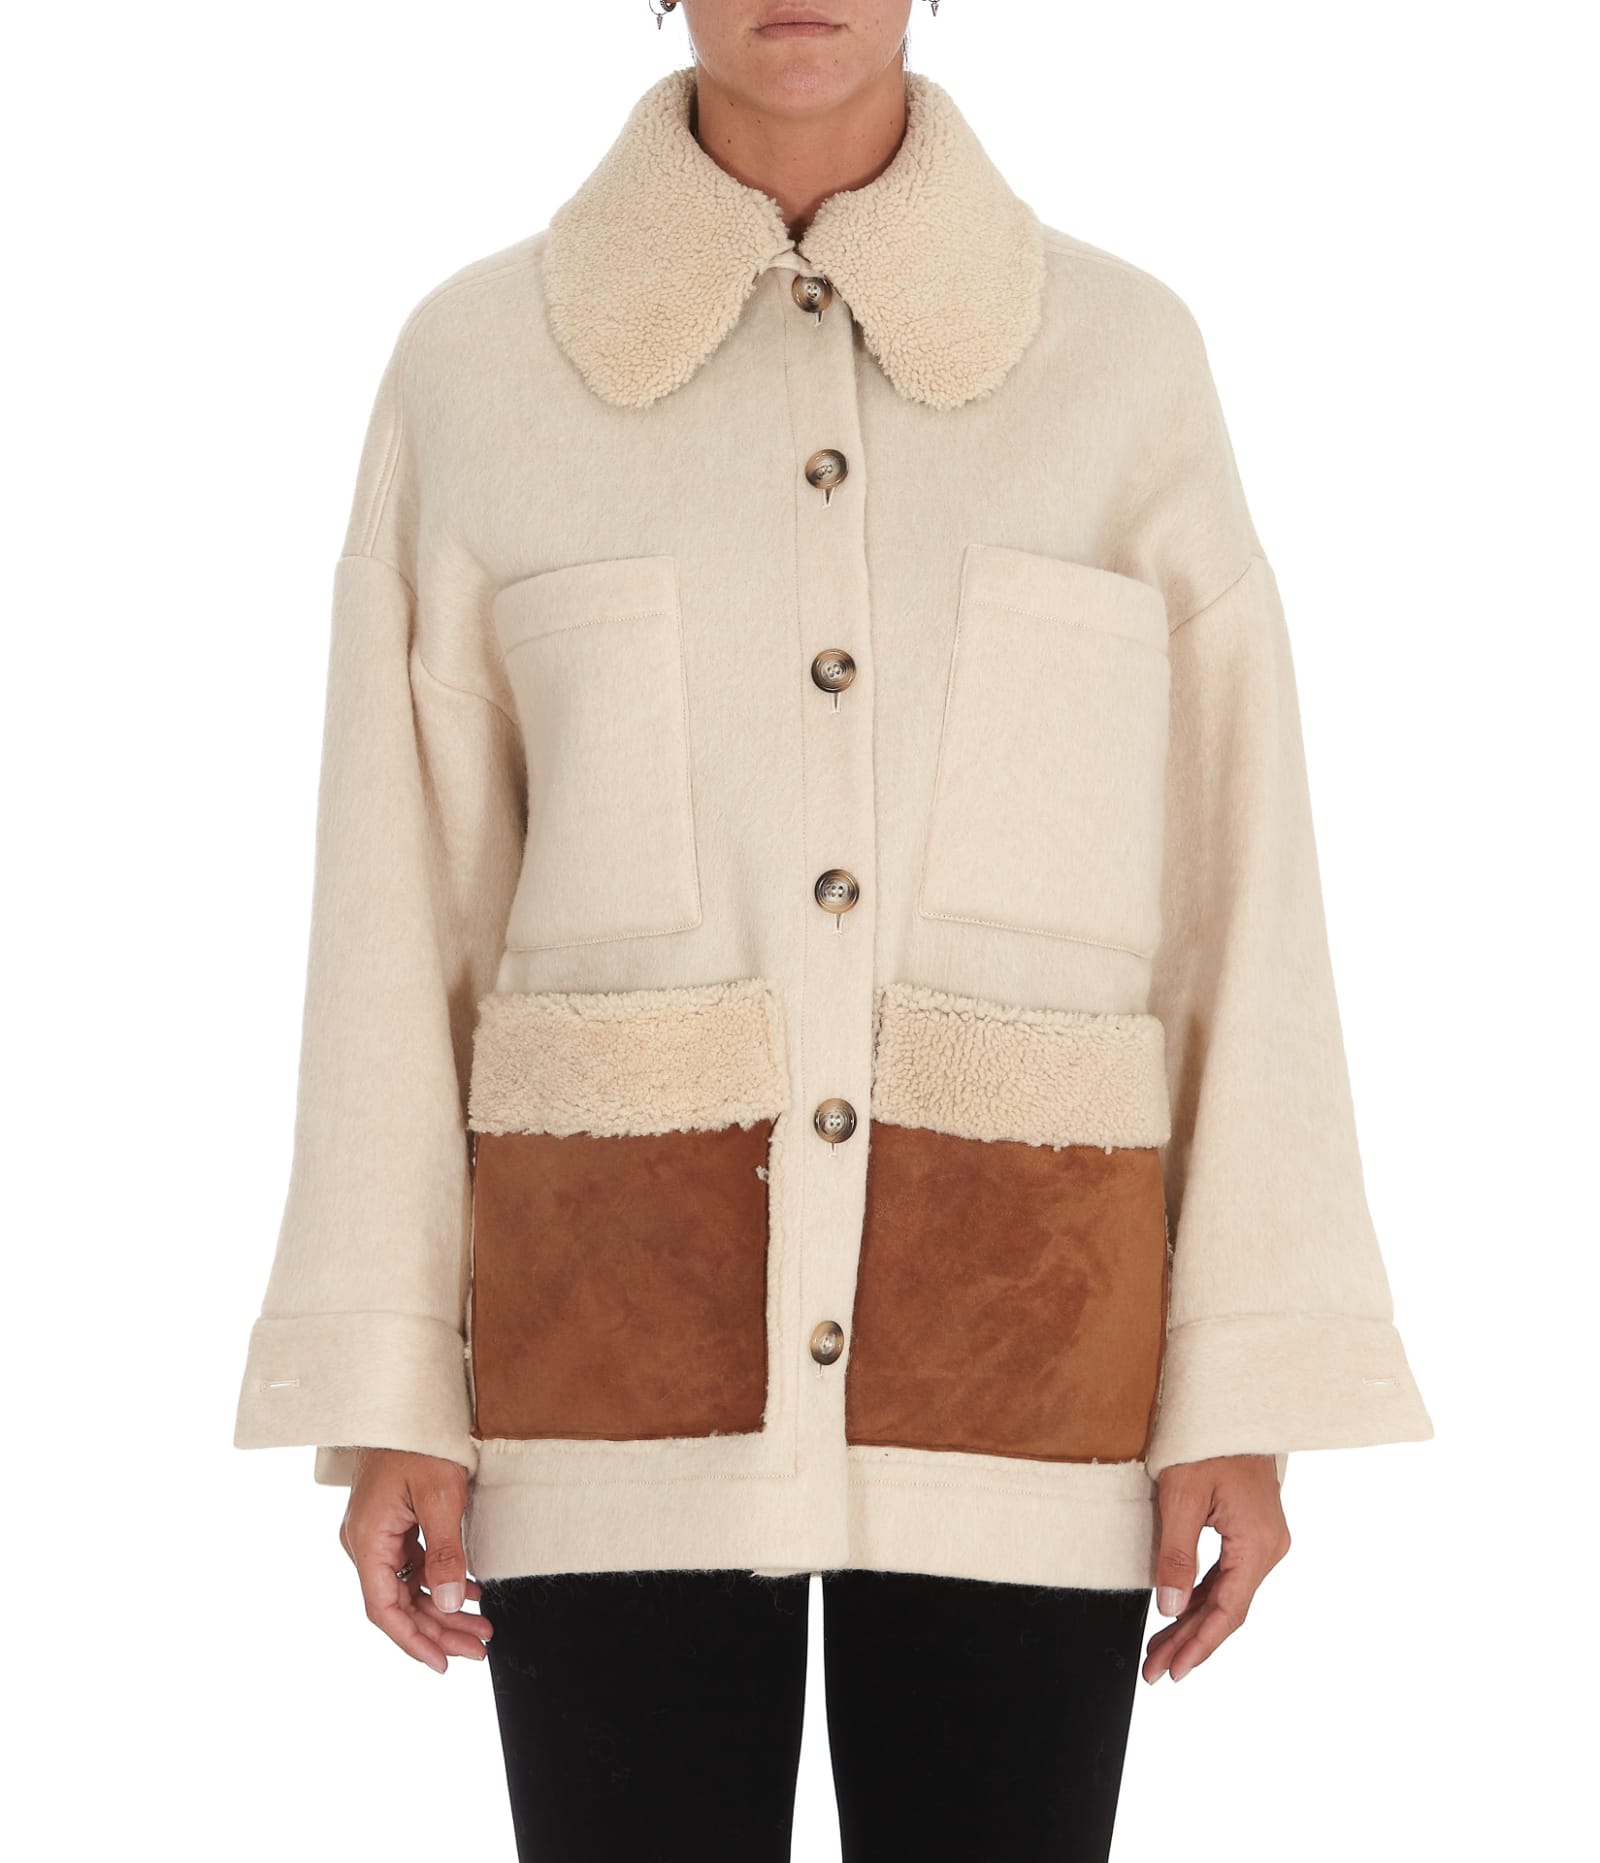 Ava Adore Jacket Coat With Sheepskin Pockets And Collar